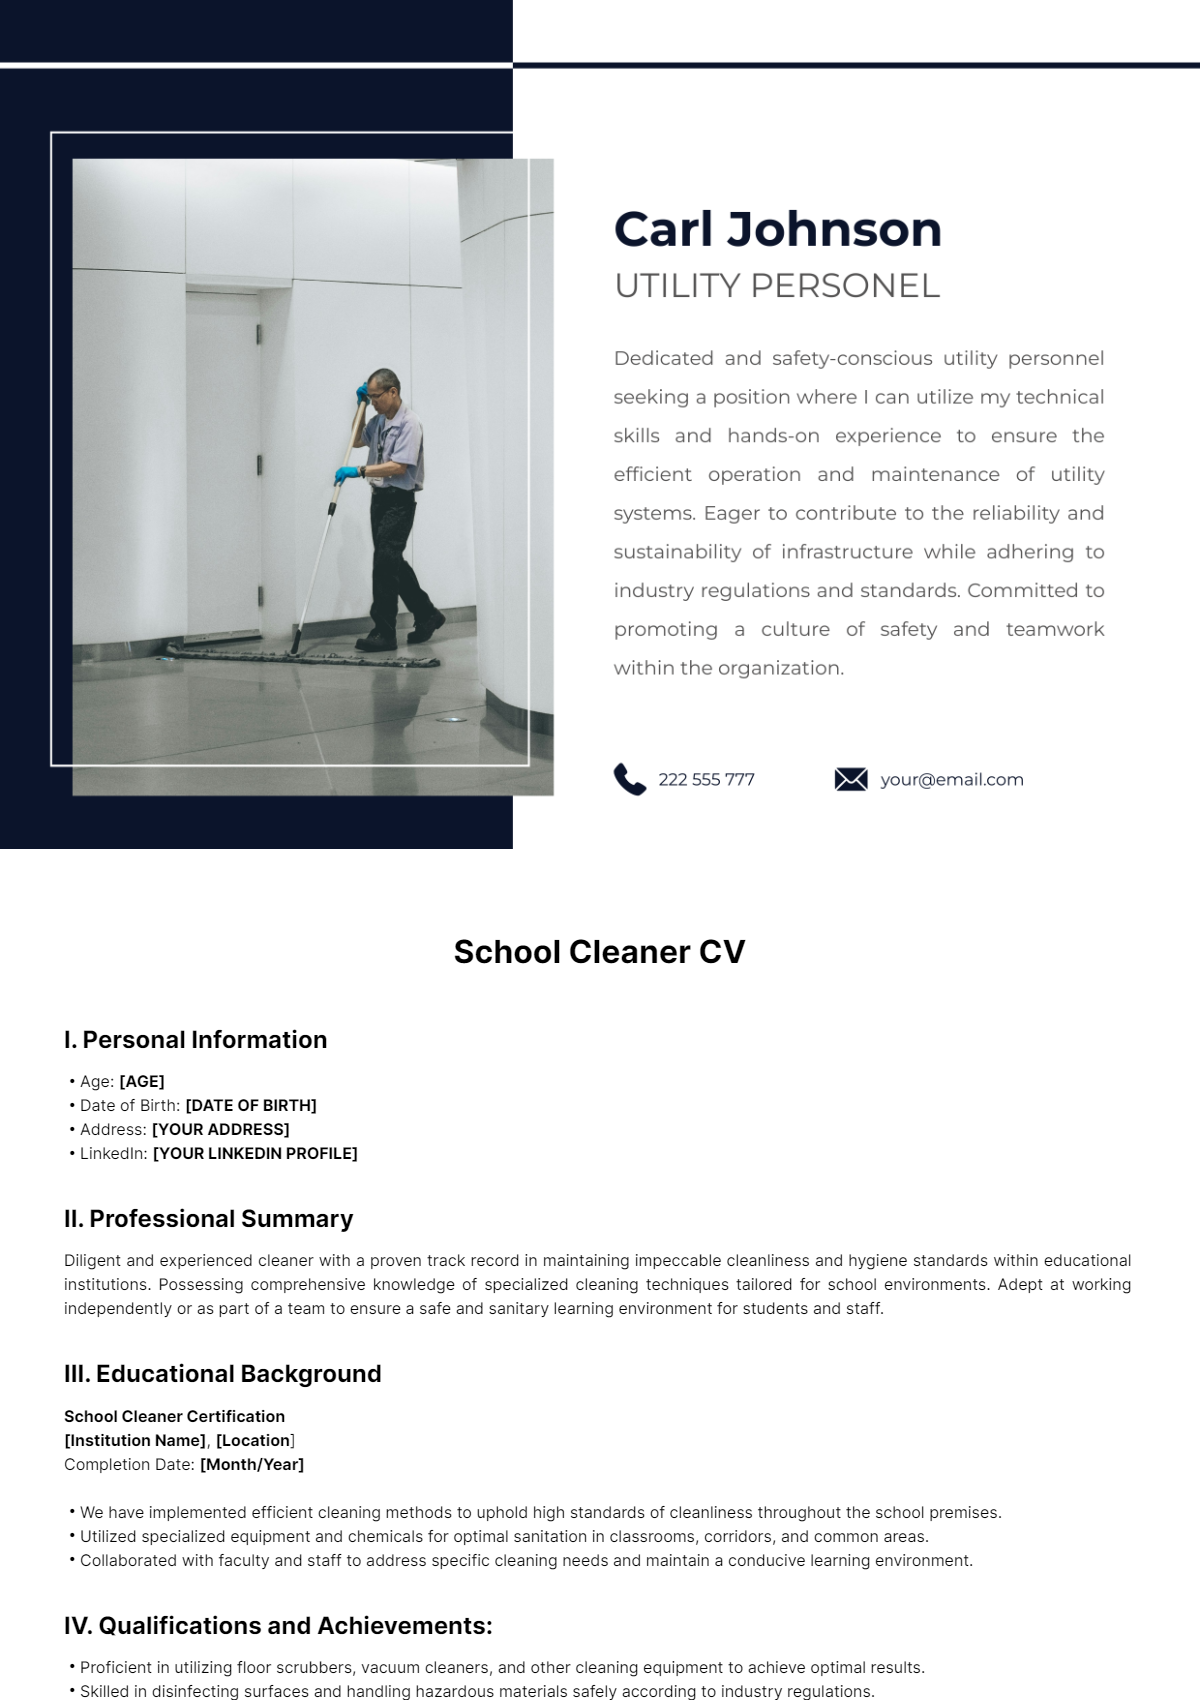 School Cleaner CV Template